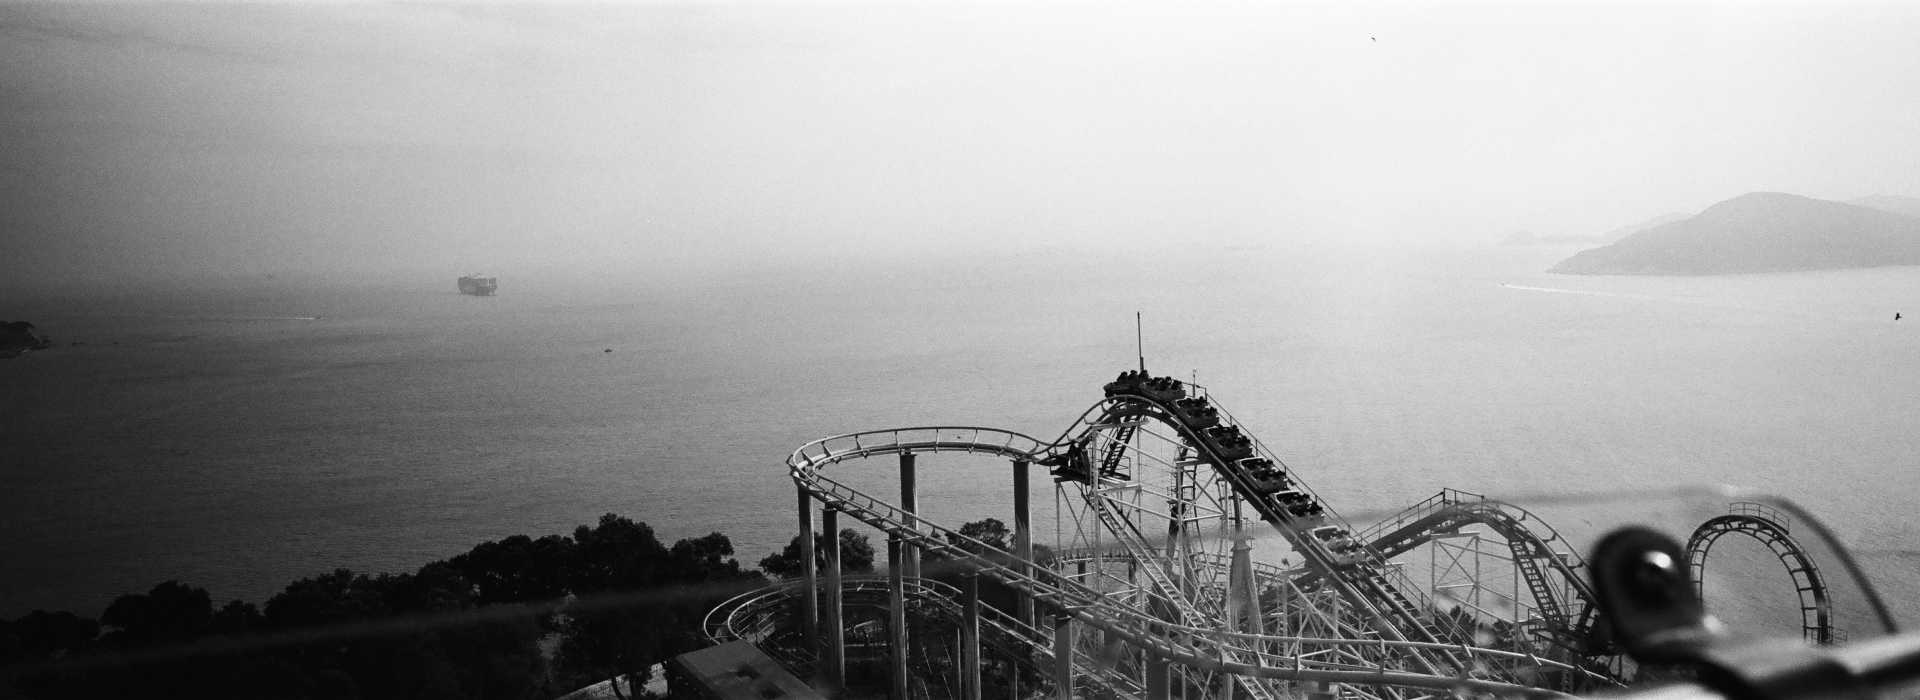  "The Dragon" Rollercoaster Ocean Park, Hong Kong. 2014 